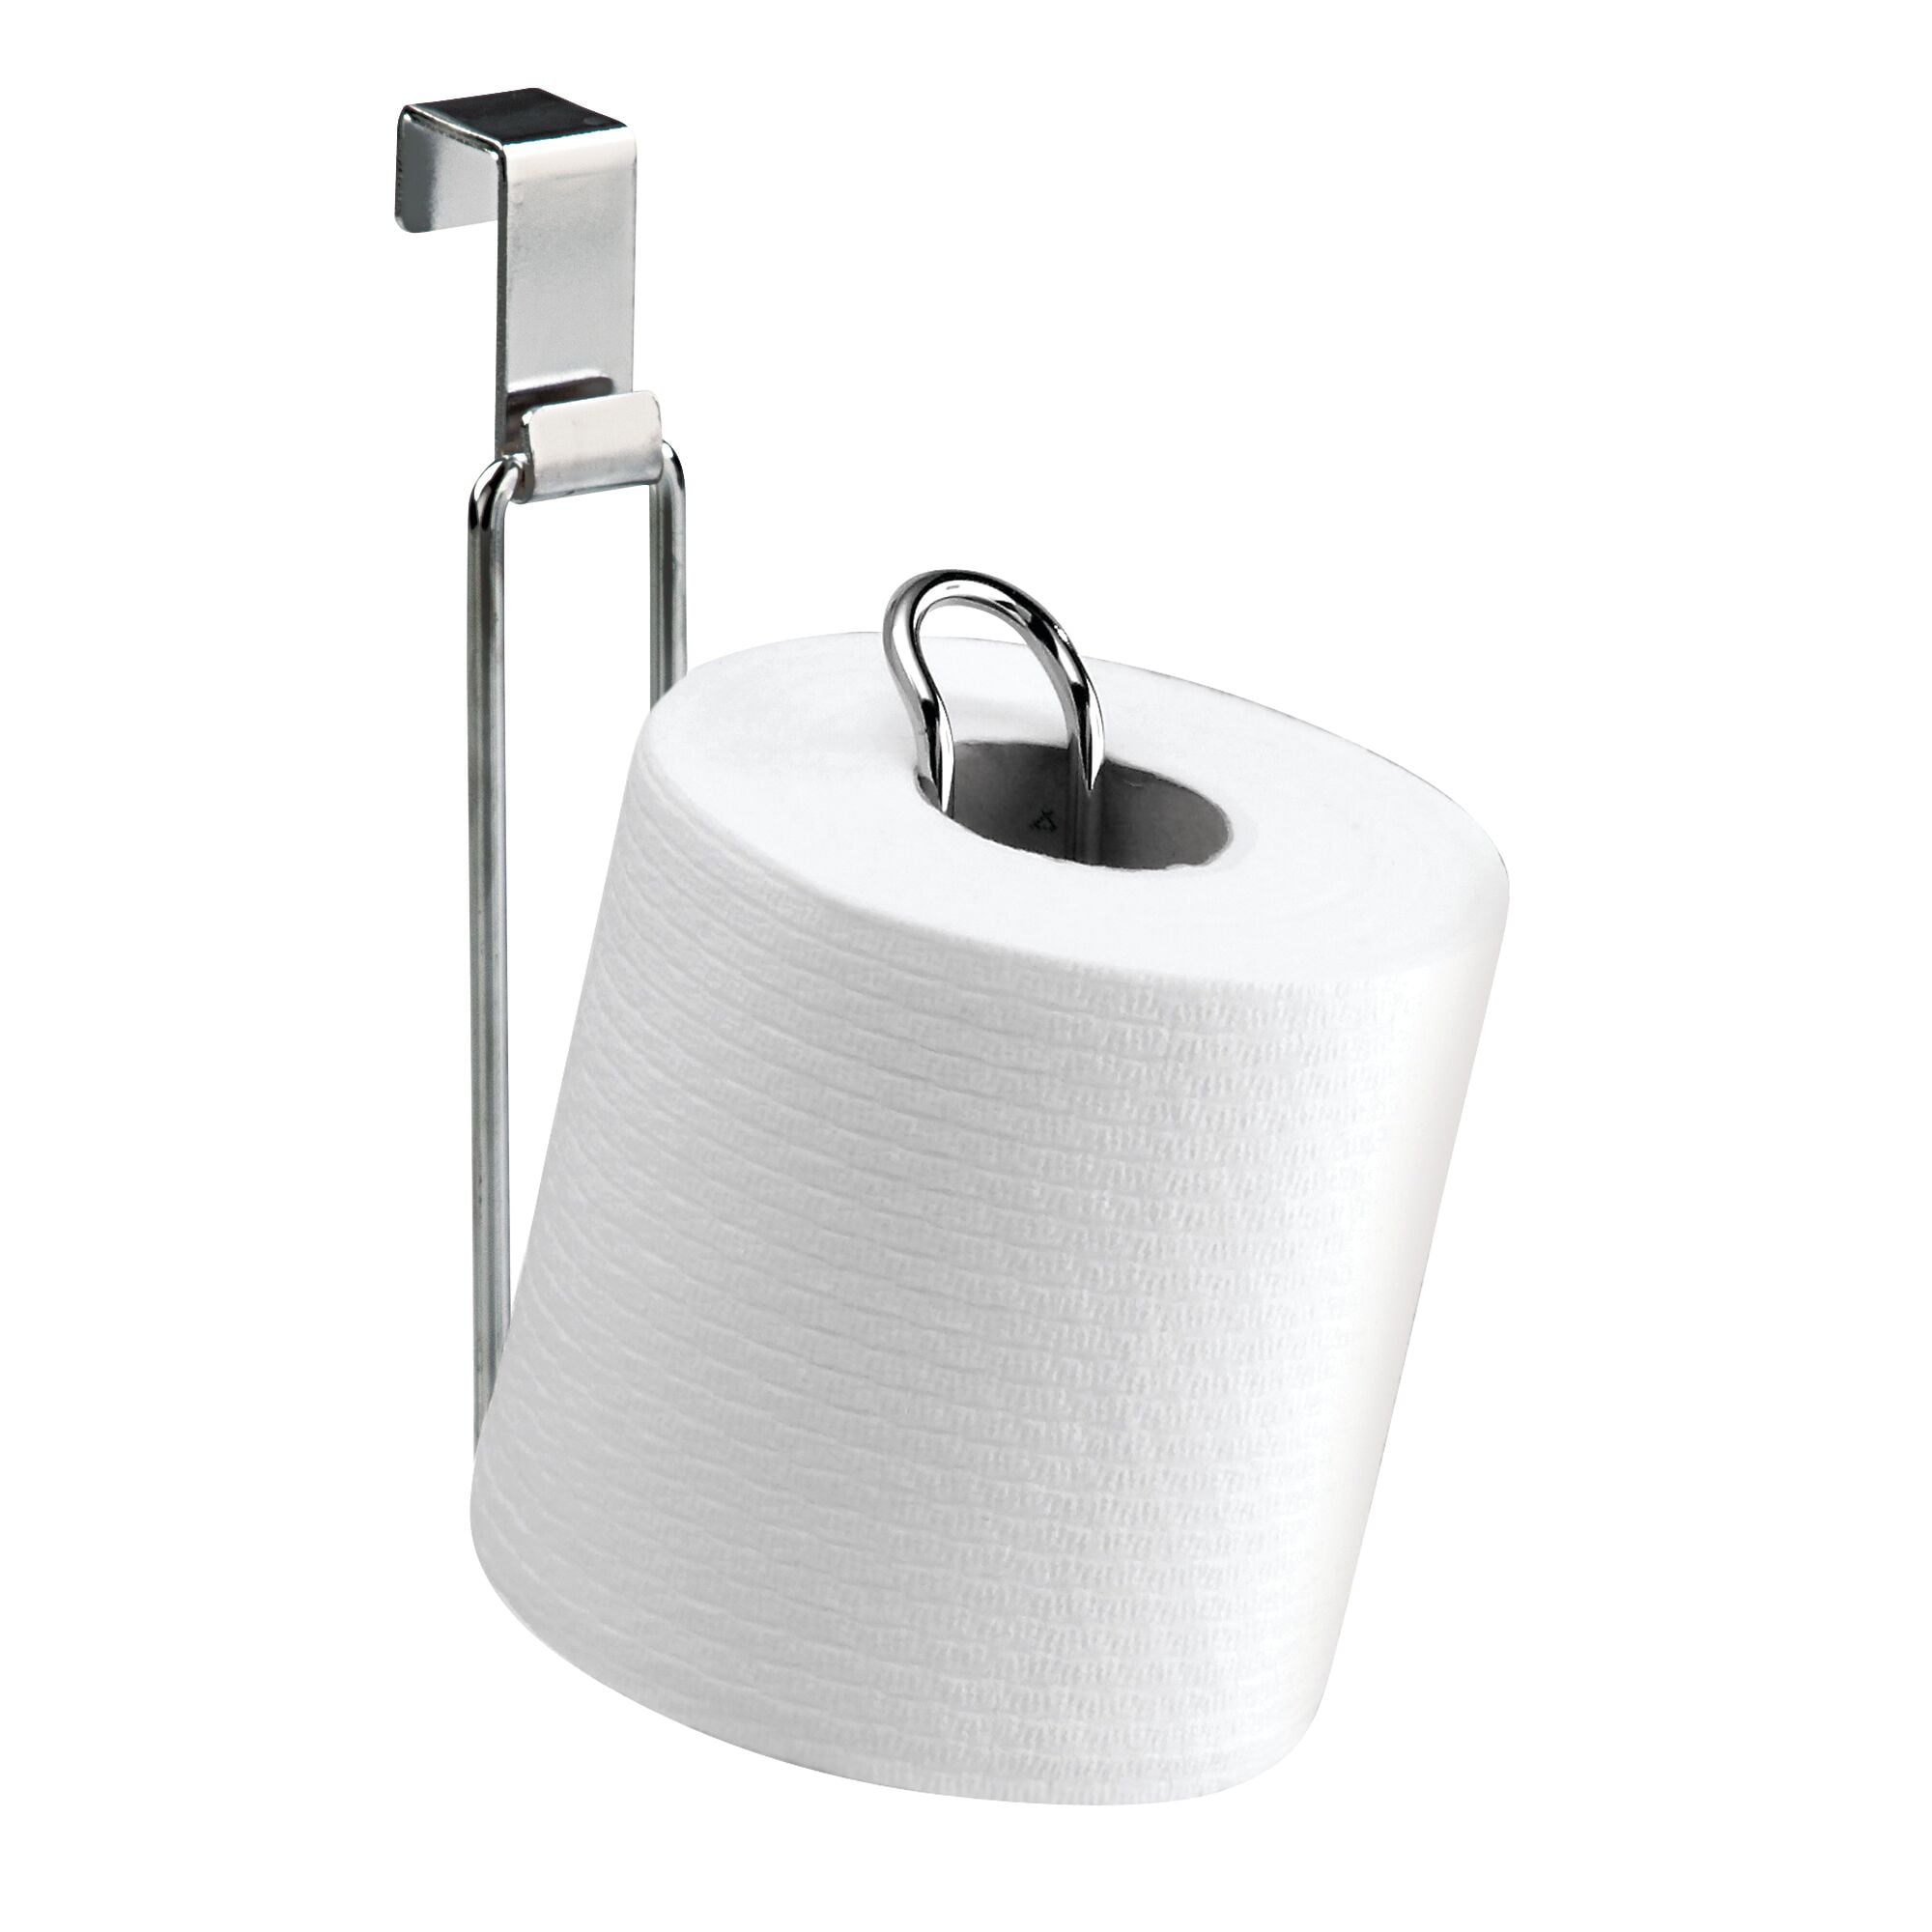 TQVAI Over The Tank Toilet Paper Roll Holder Stainless Steel Bathroom  Tissue Storage Rack, Chrome Finish